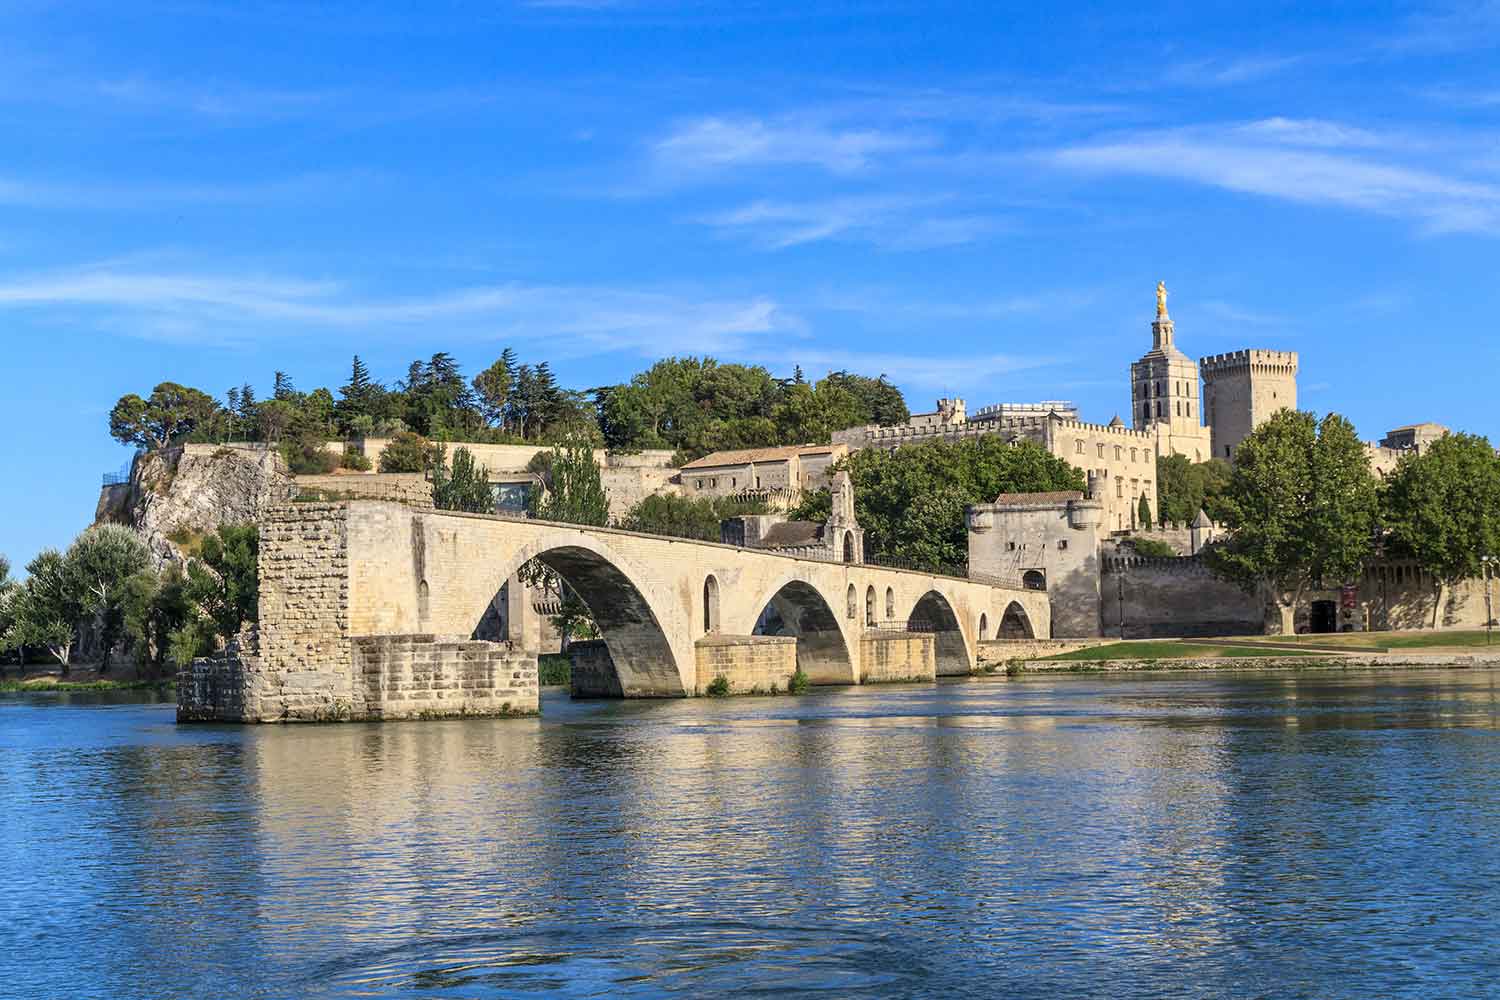 Avignon's historic bridge jutting out into the river